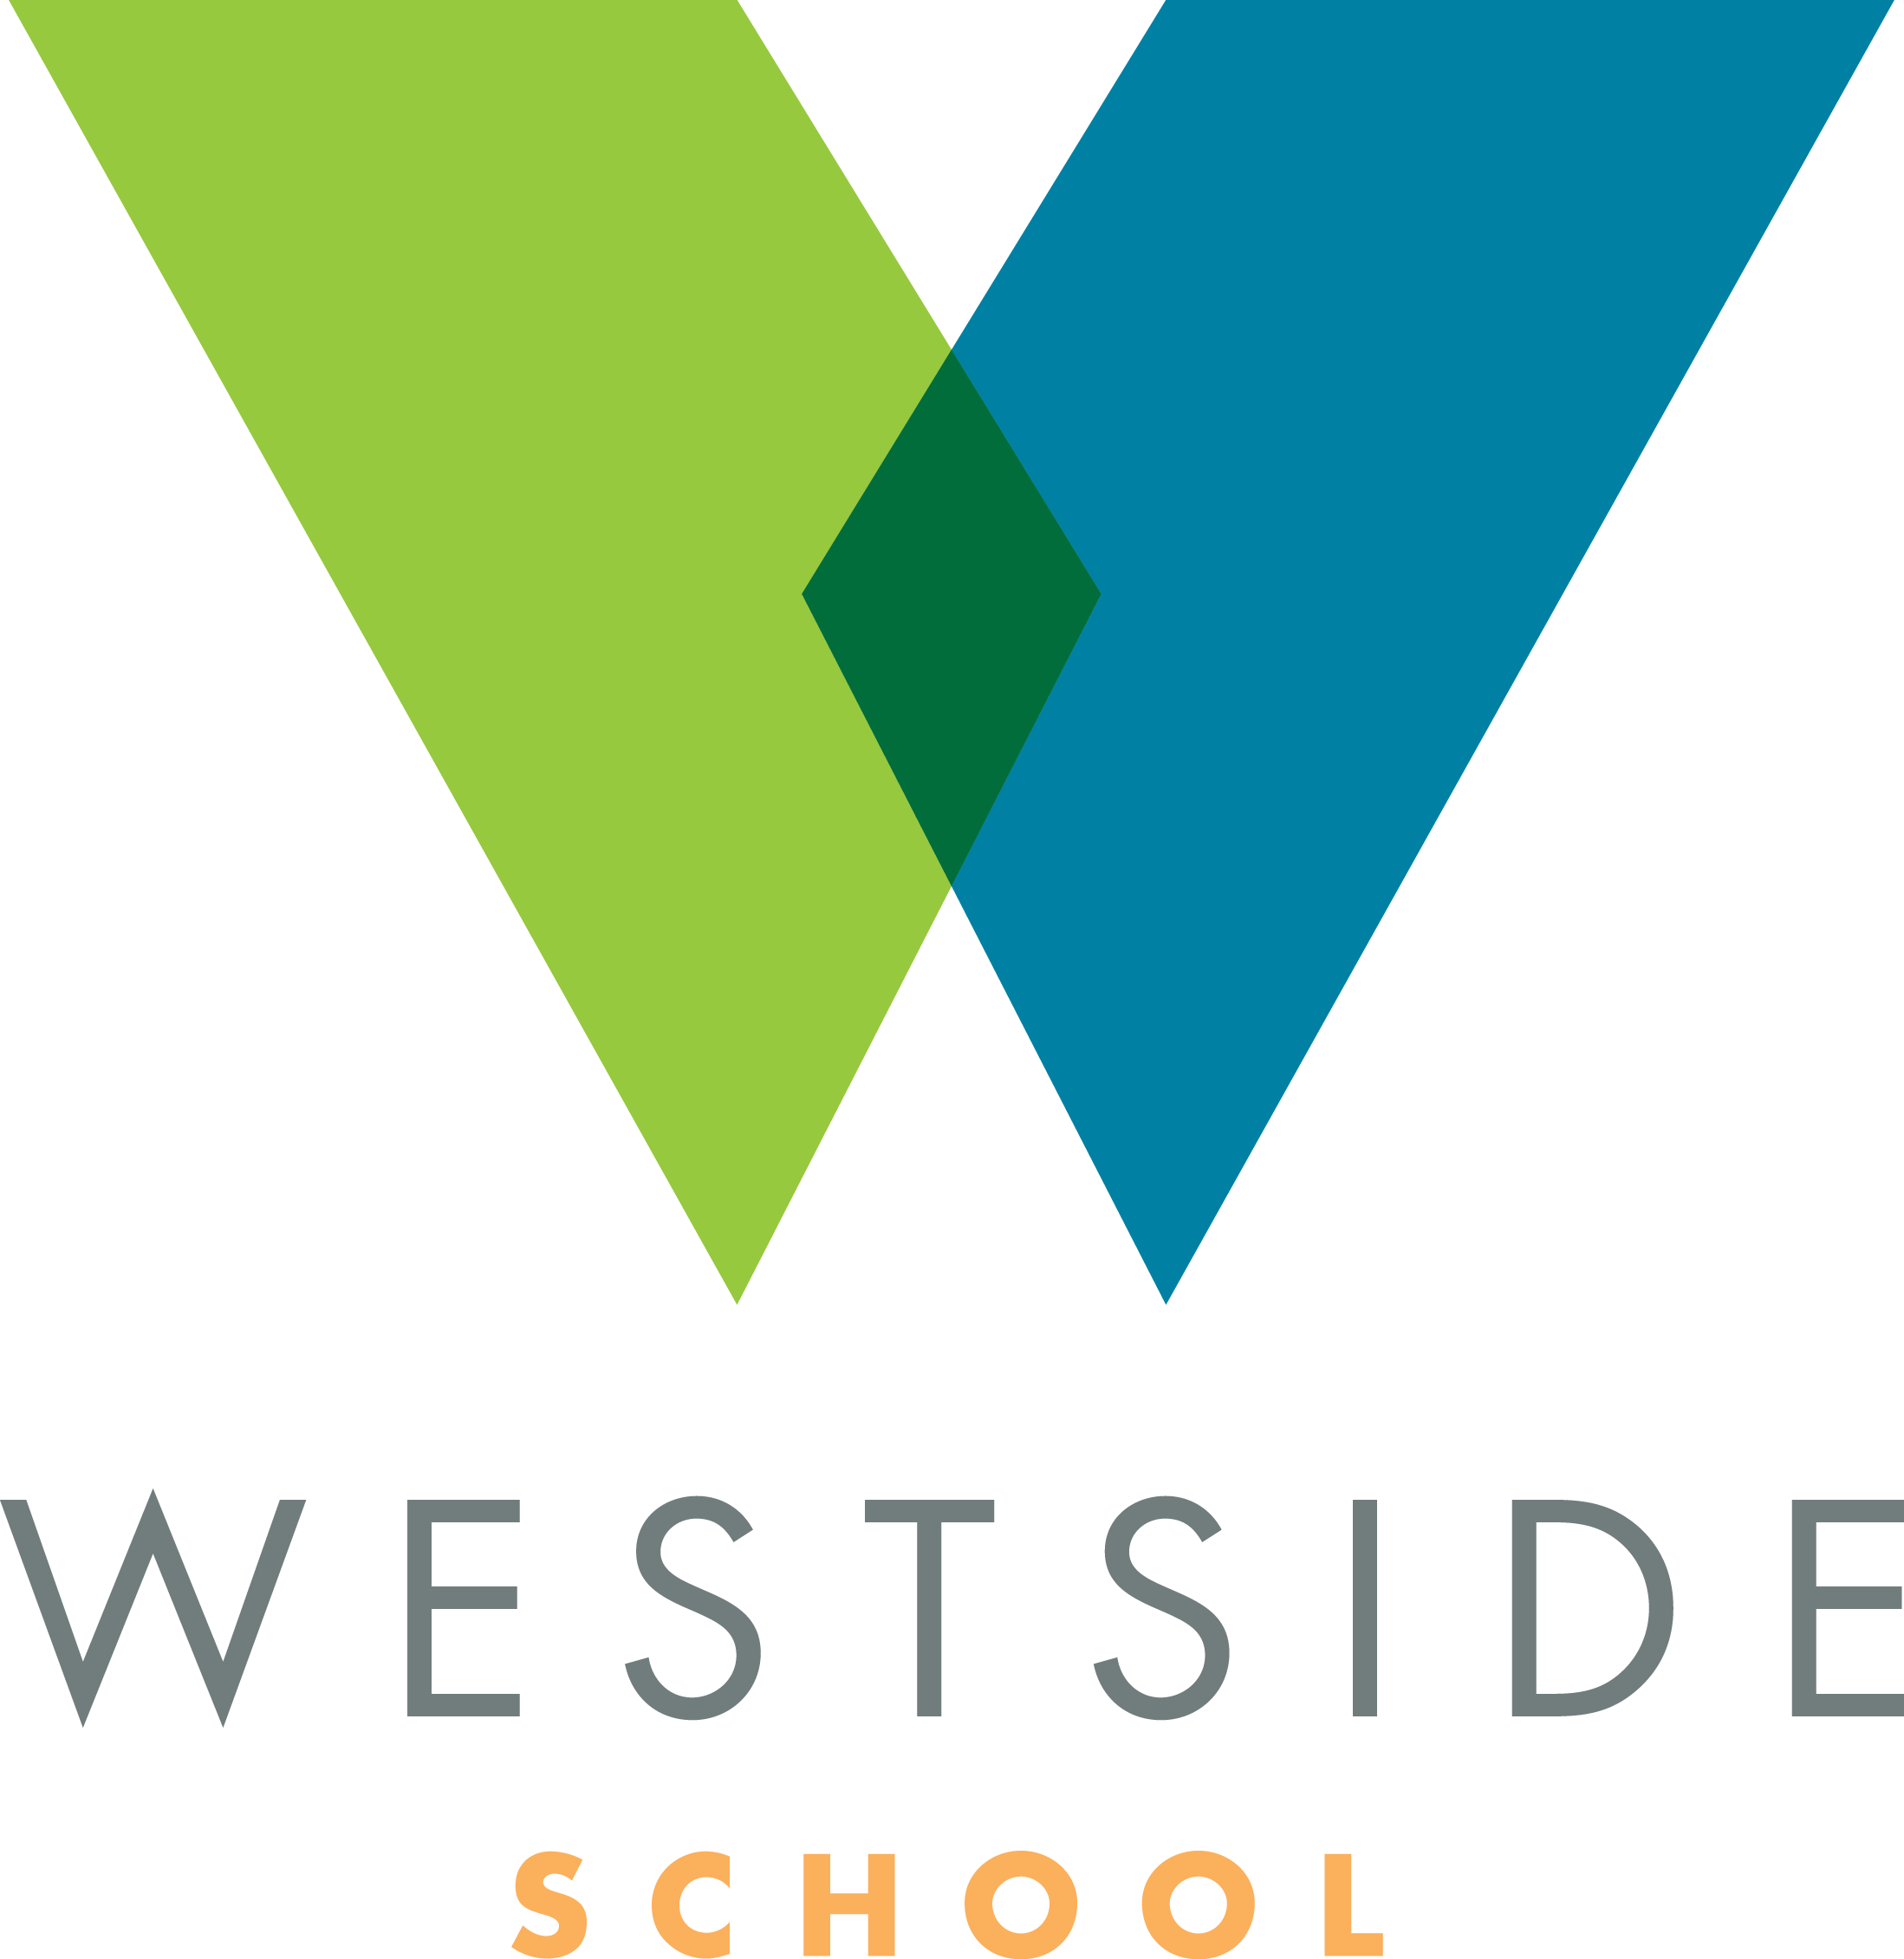 Westside School (2197x2261)